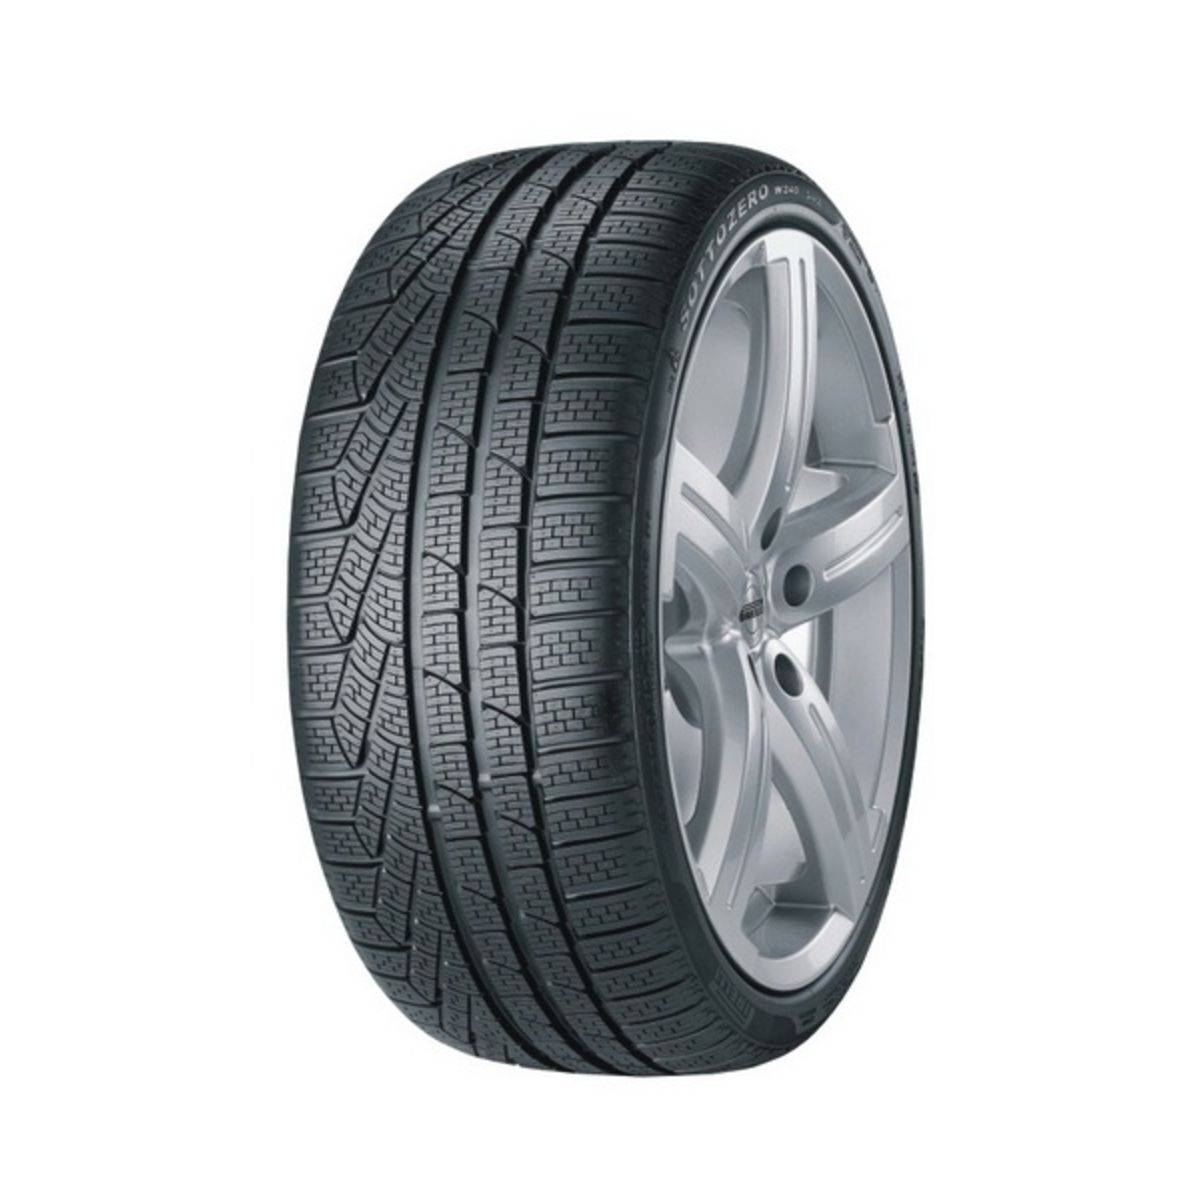 Neumáticos de invierno PIRELLI SottoZero serie II 245/35R19 XL 93W